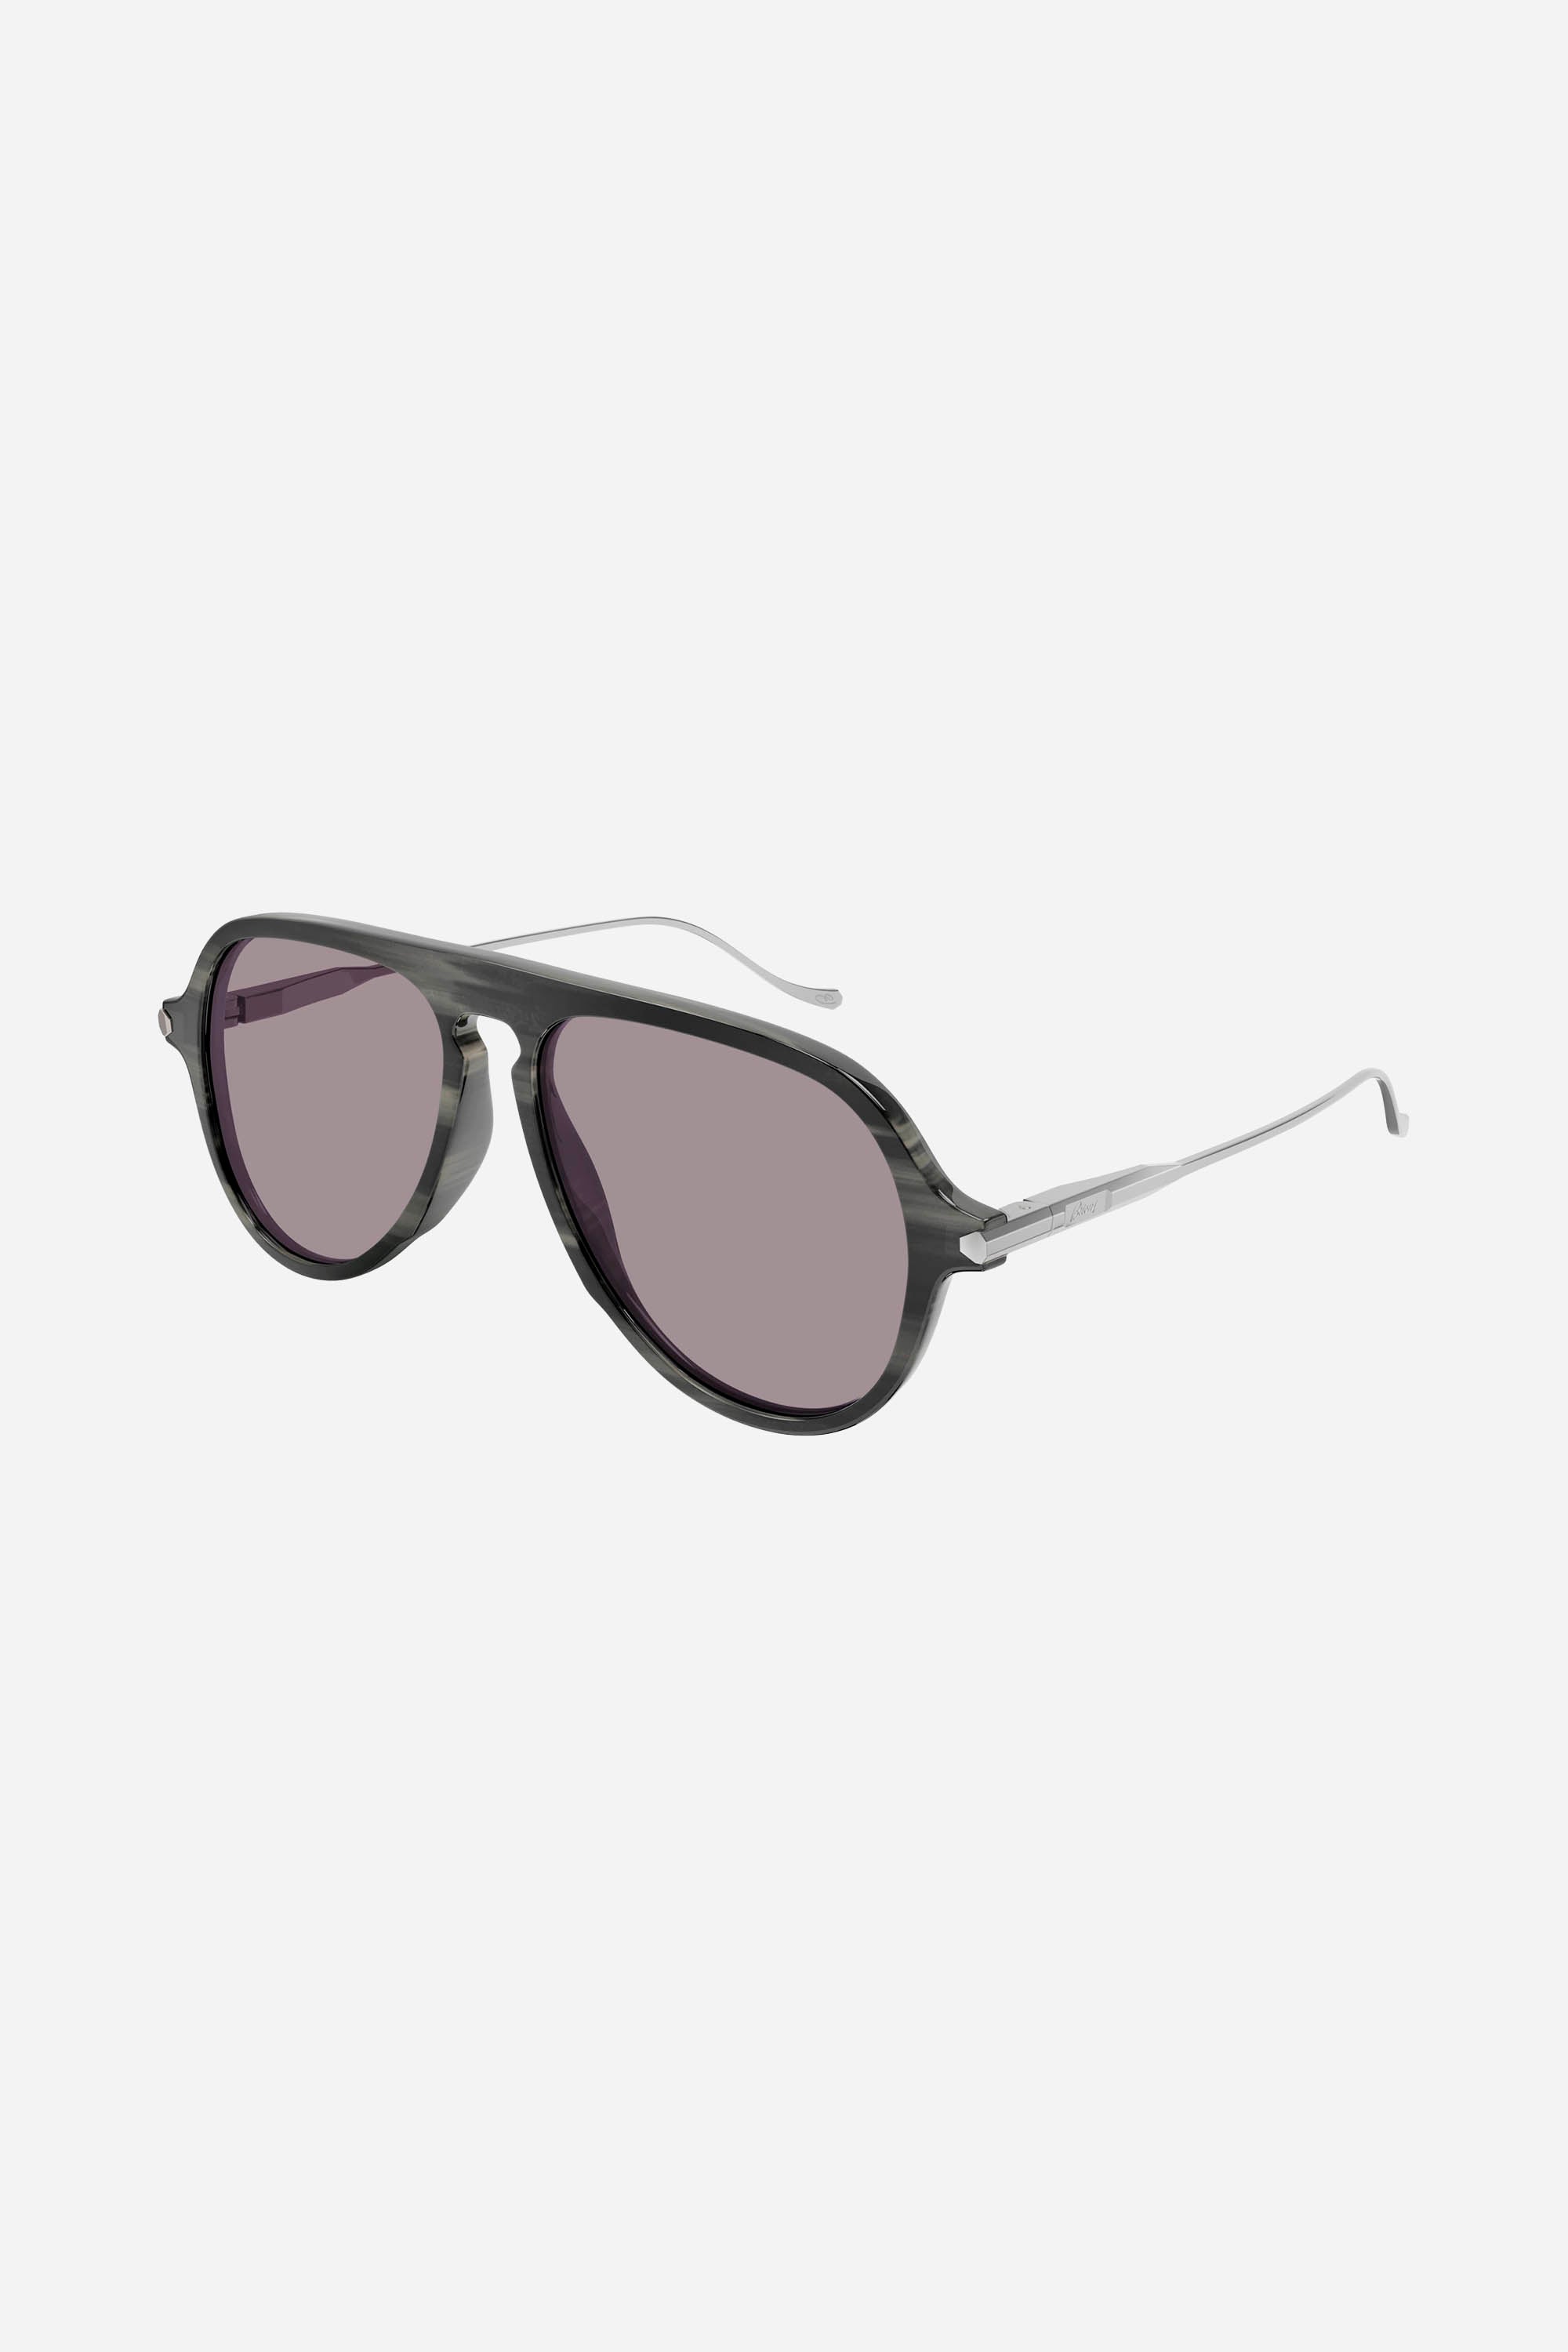 Brioni pilot black sunglasses - Eyewear Club